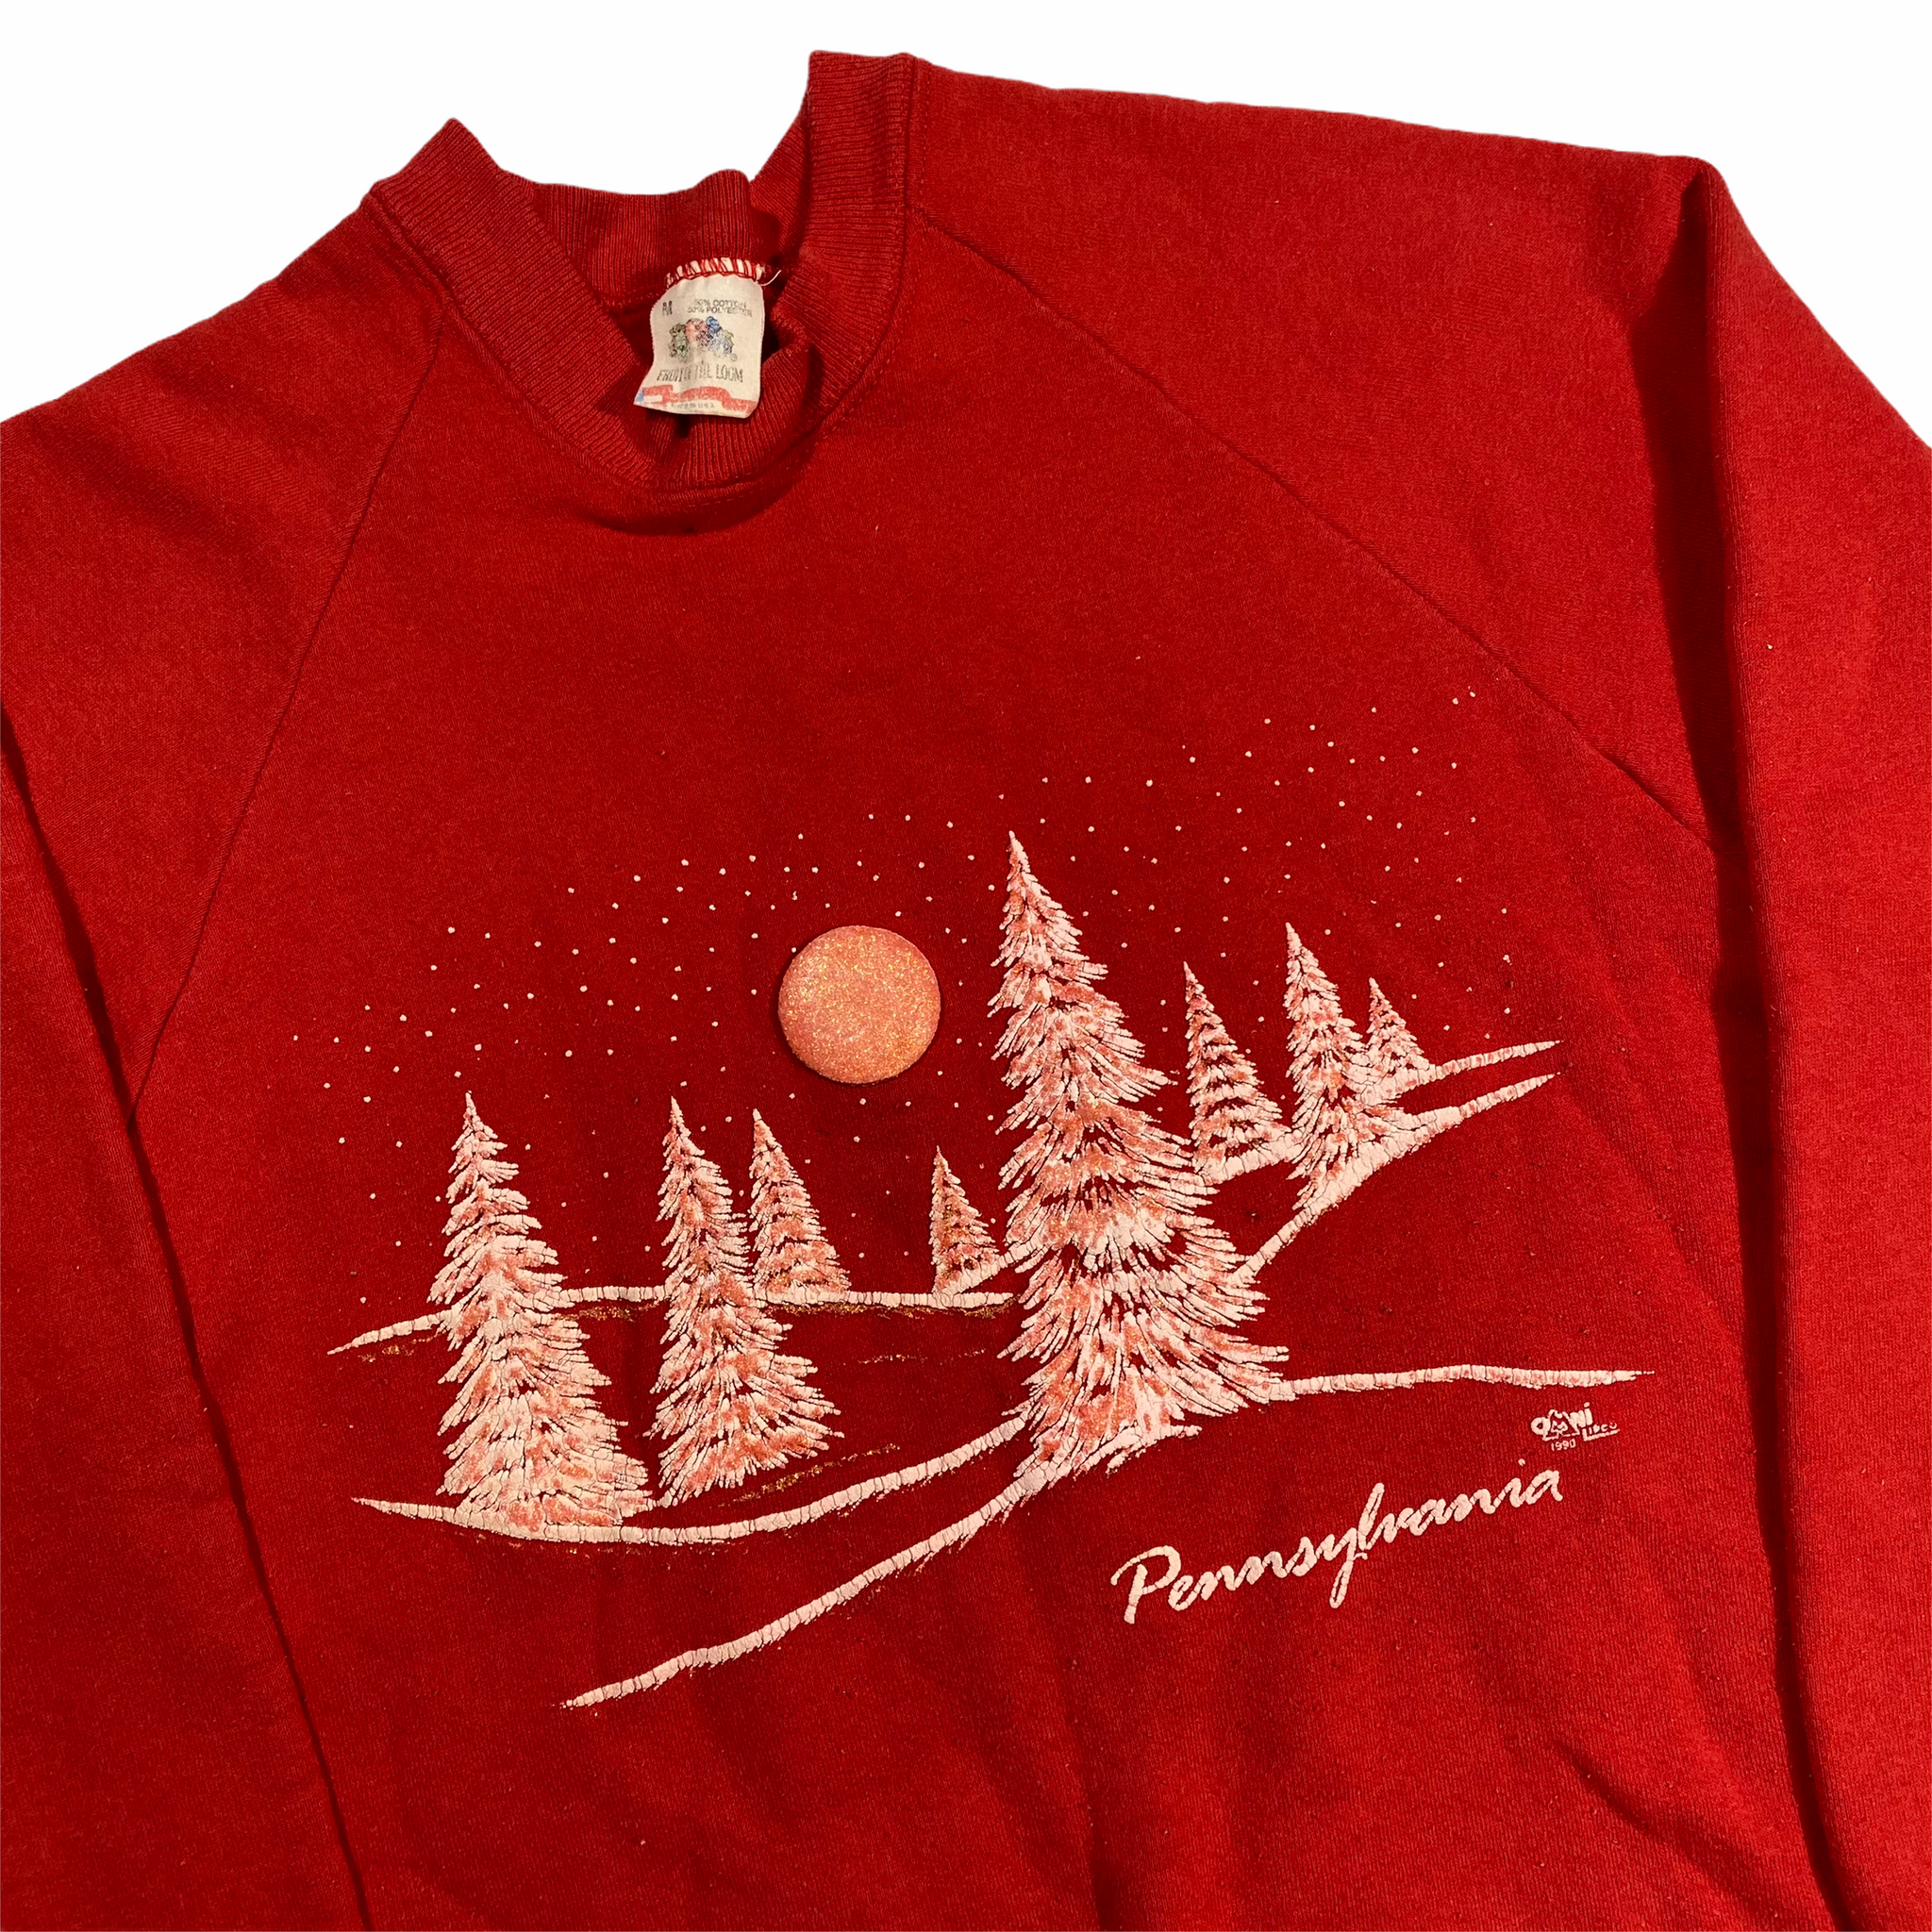 80s Pennsylvania sweatshirt. S/M